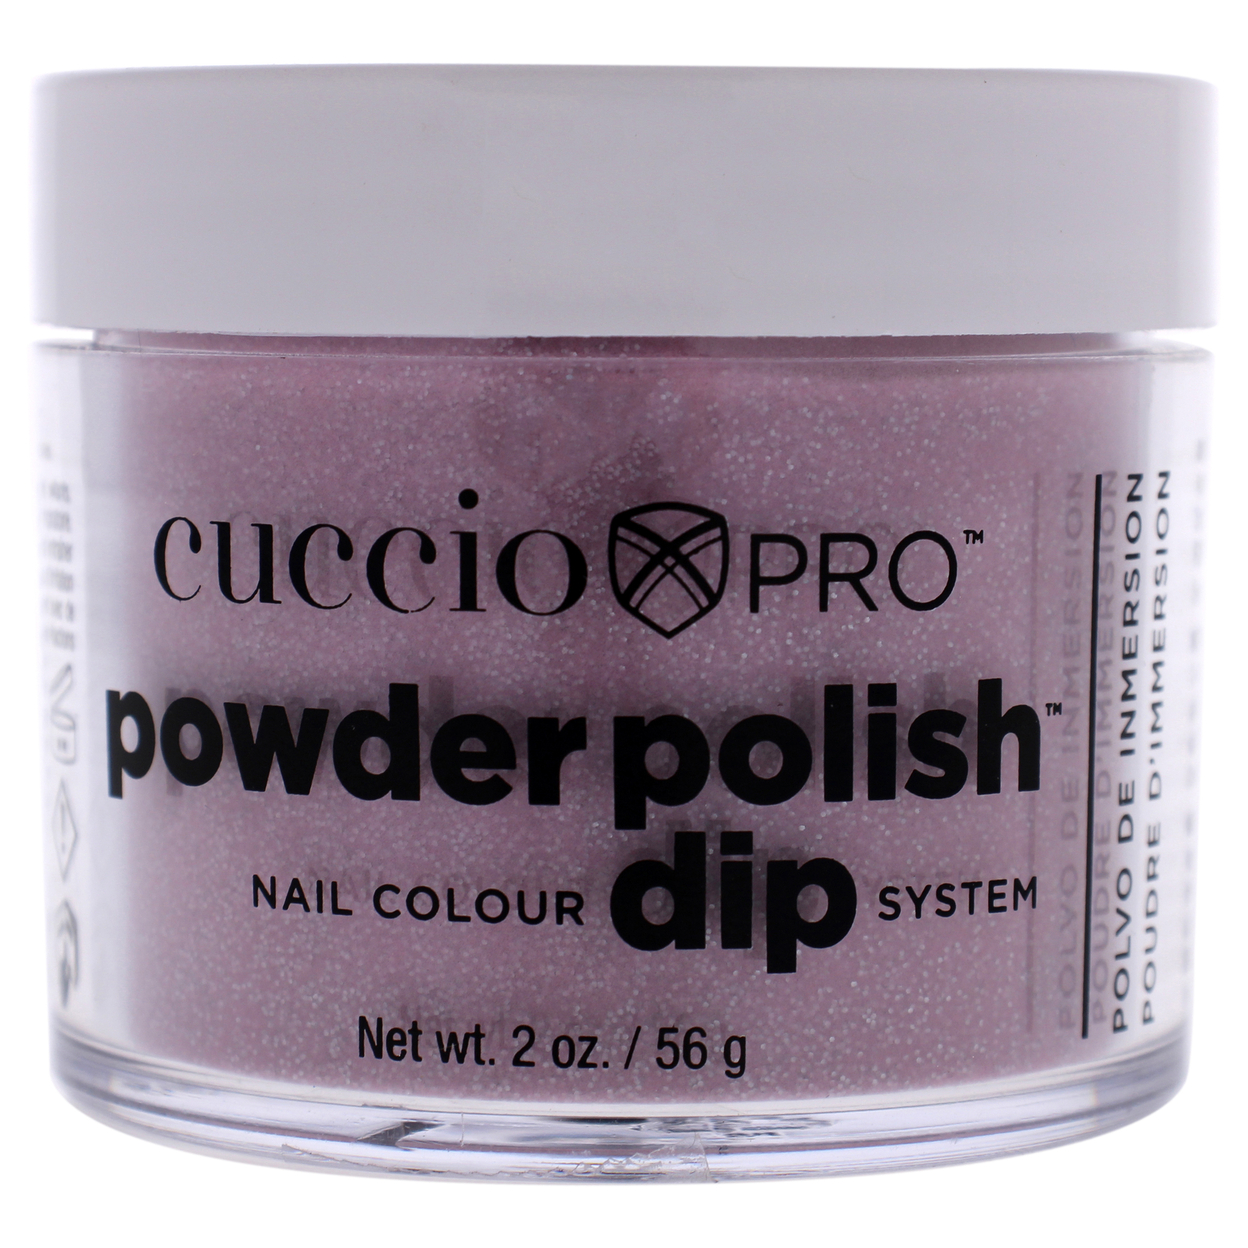 Cuccio Colour Pro Powder Polish Nail Colour Dip System - Pink With Silver Glitter Nail Powder 1.6 Oz